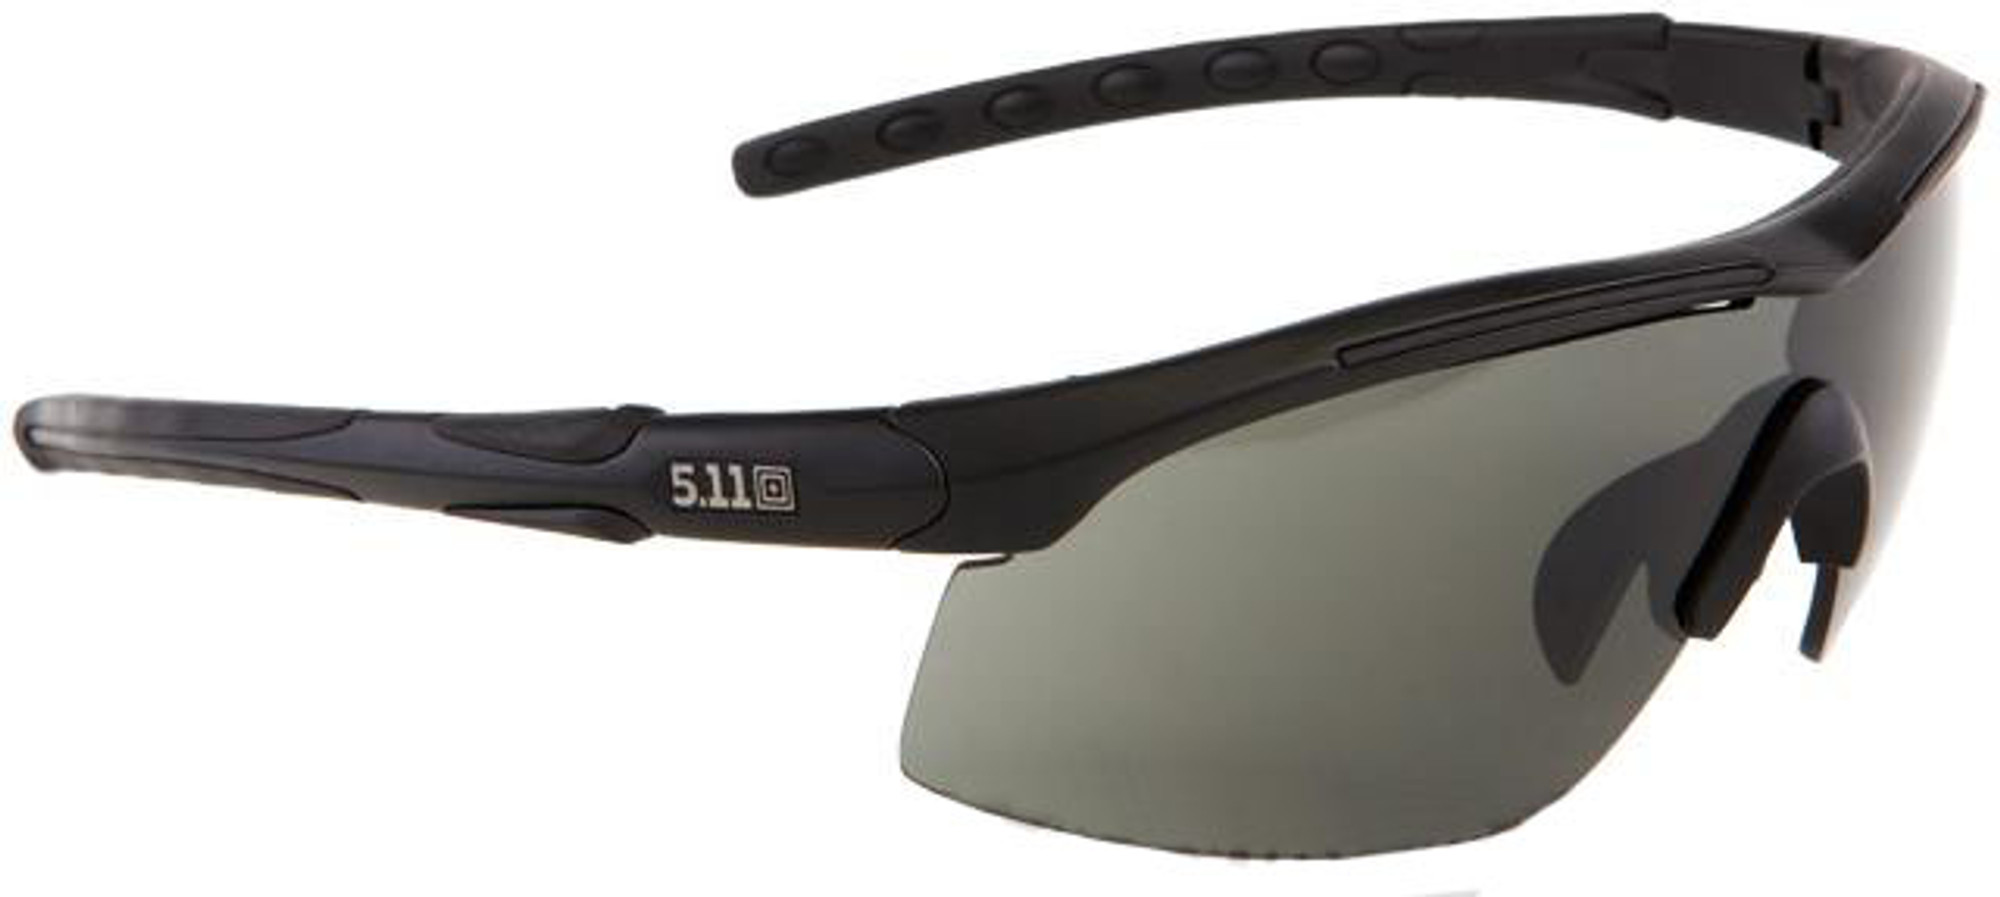 5.11 Tactical RAID Eyewear Tactical Sunglasses by WileyX - Hero Outdoors